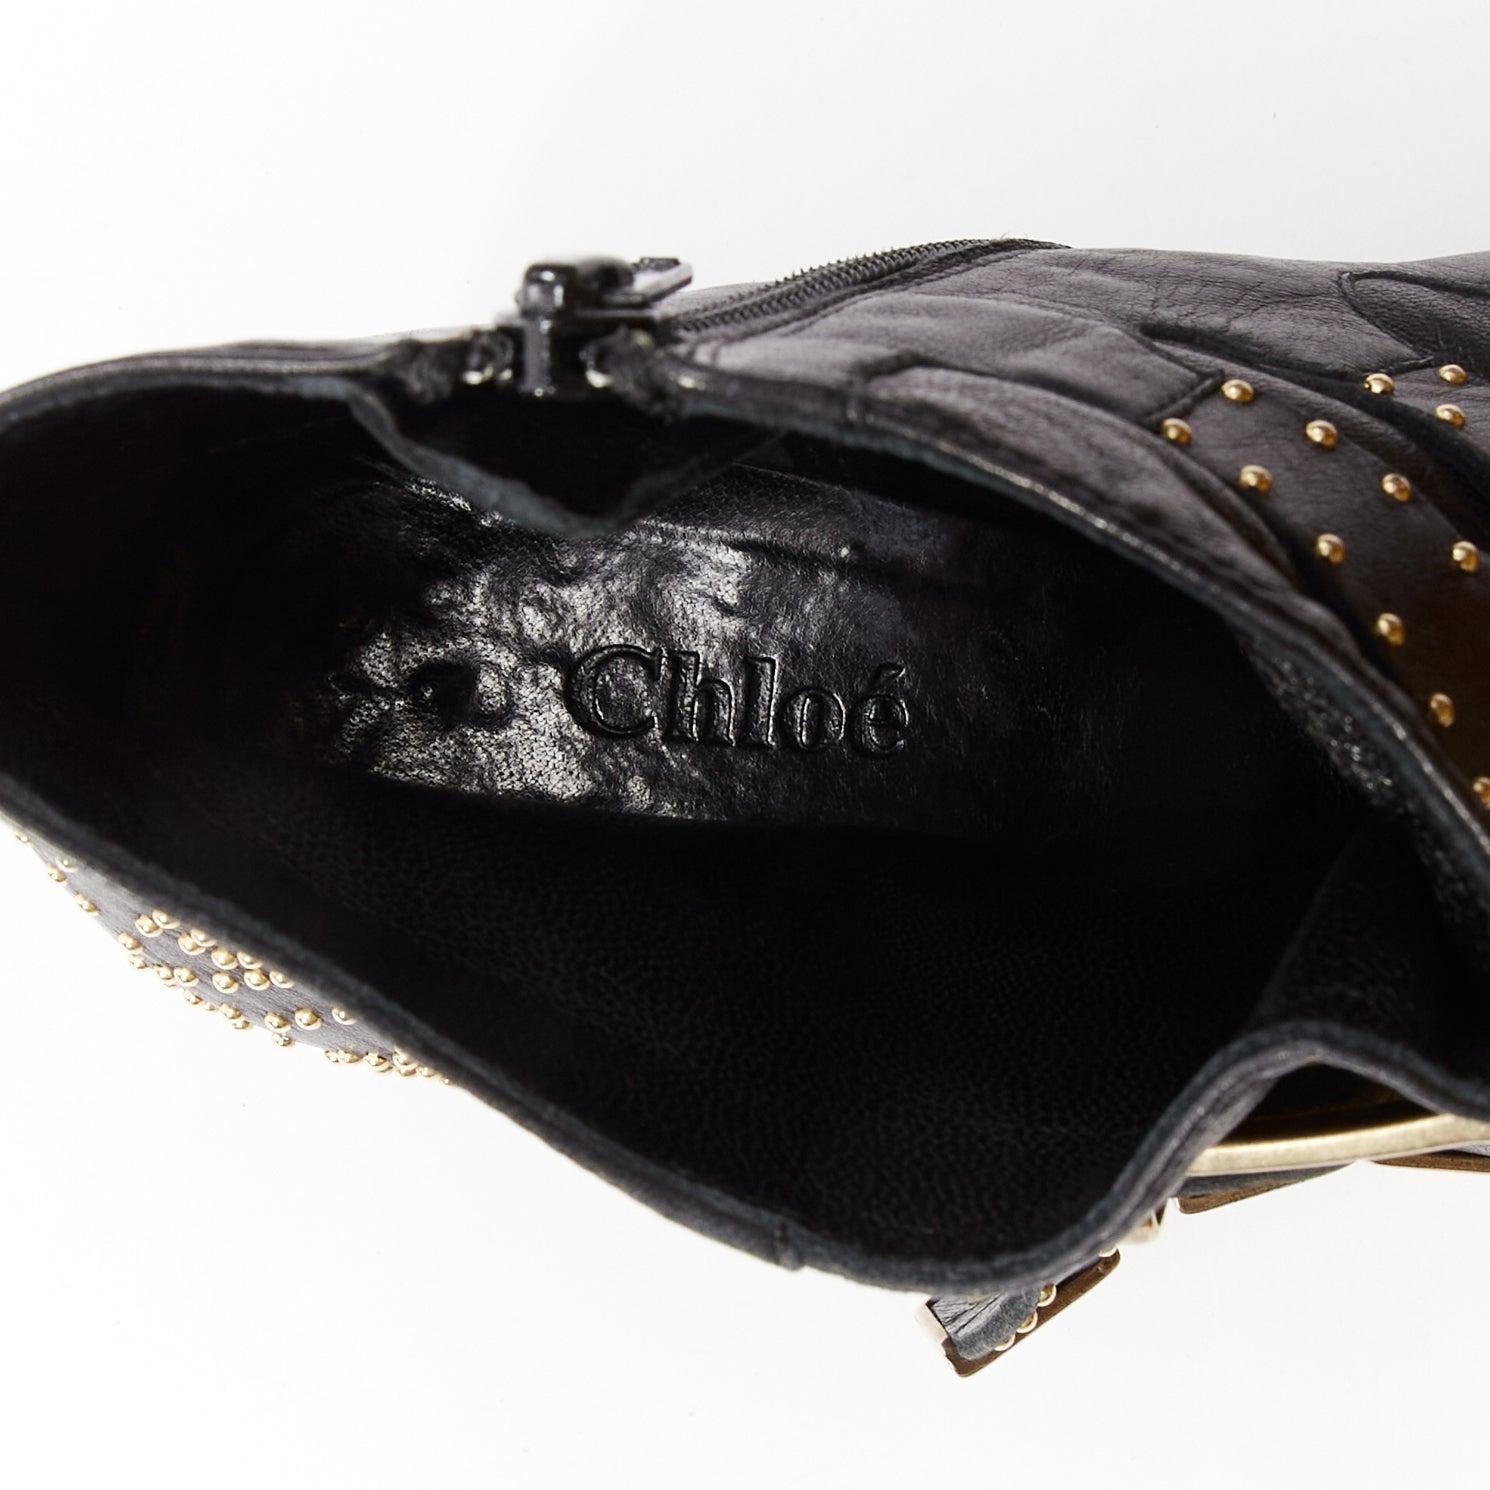 CHLOE Susanna black gold micro stud floral embellished buckle ankle boot EU37 2